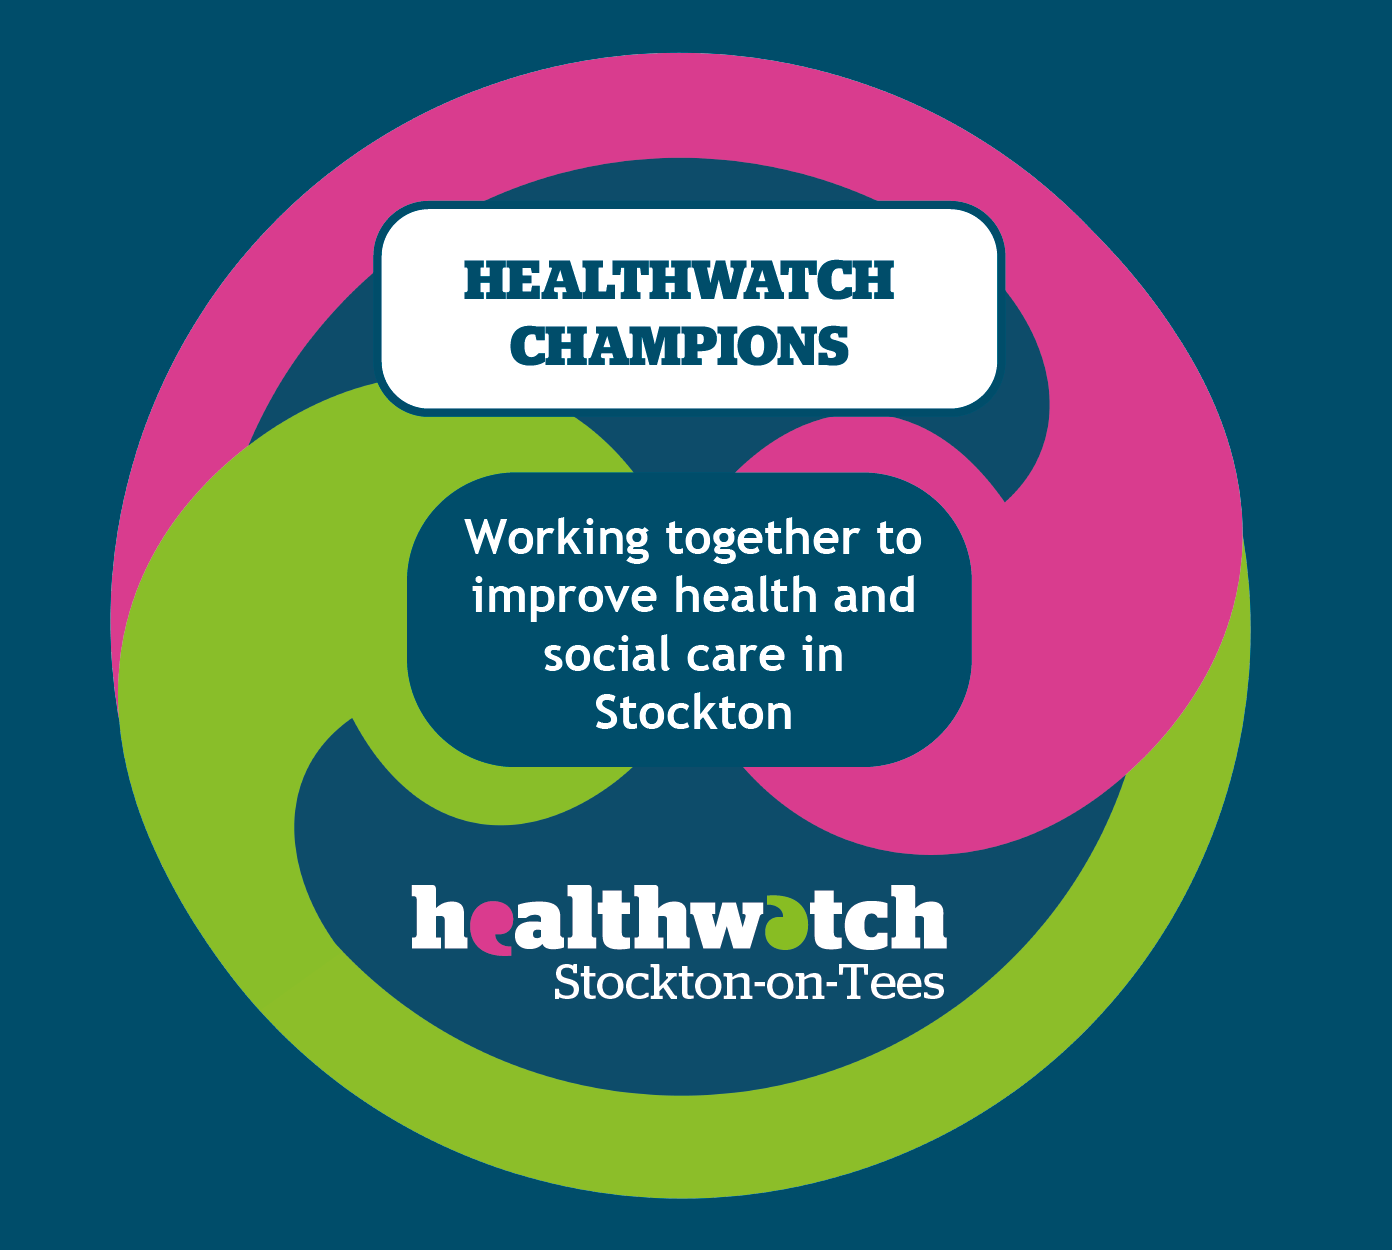 Graphic of Healthwatch Stockton Champions logo